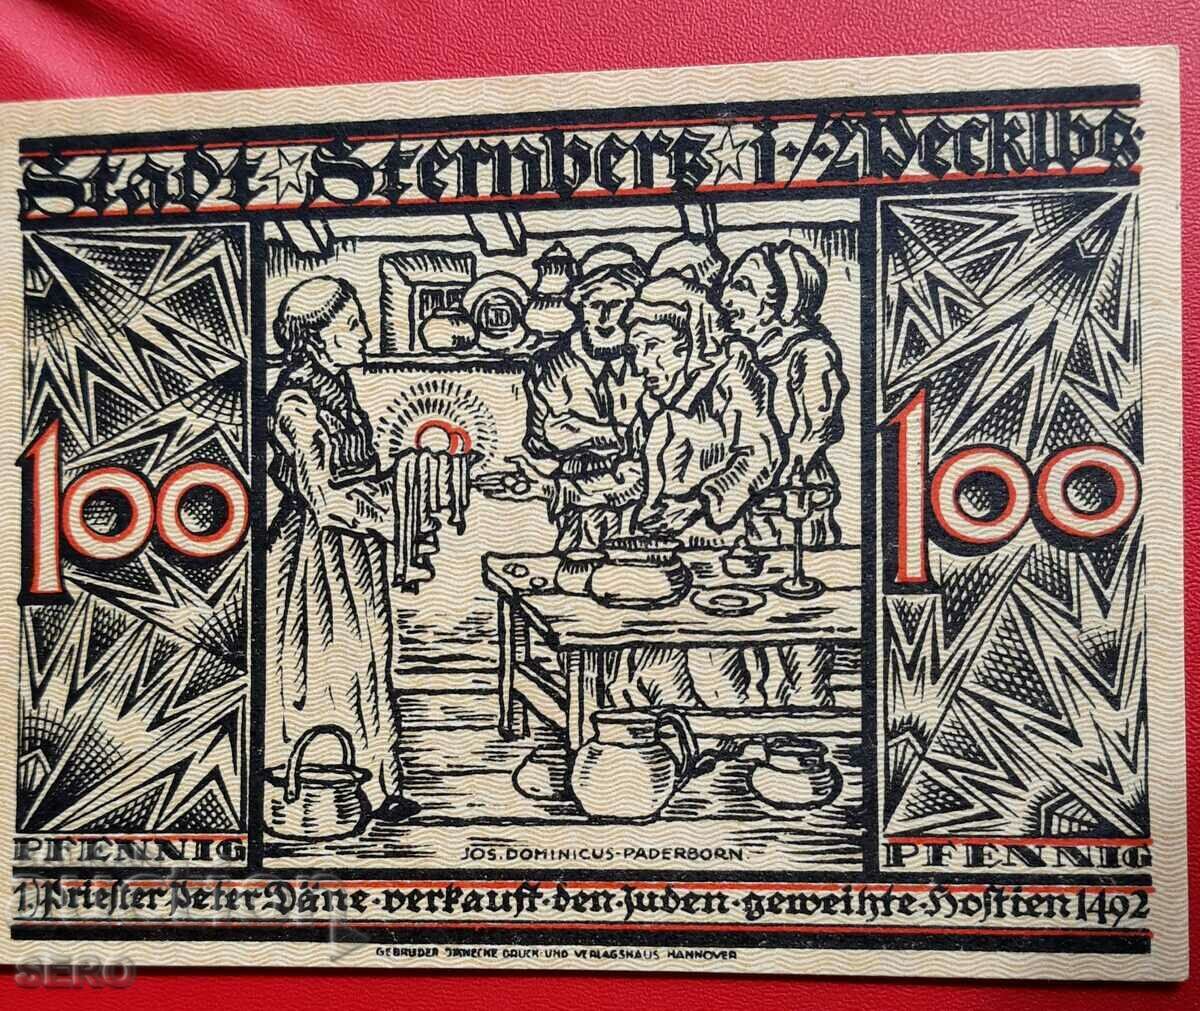 Banknote-Germany-Mecklenburg-Pomerania-Sternberg-100 pf. 1922